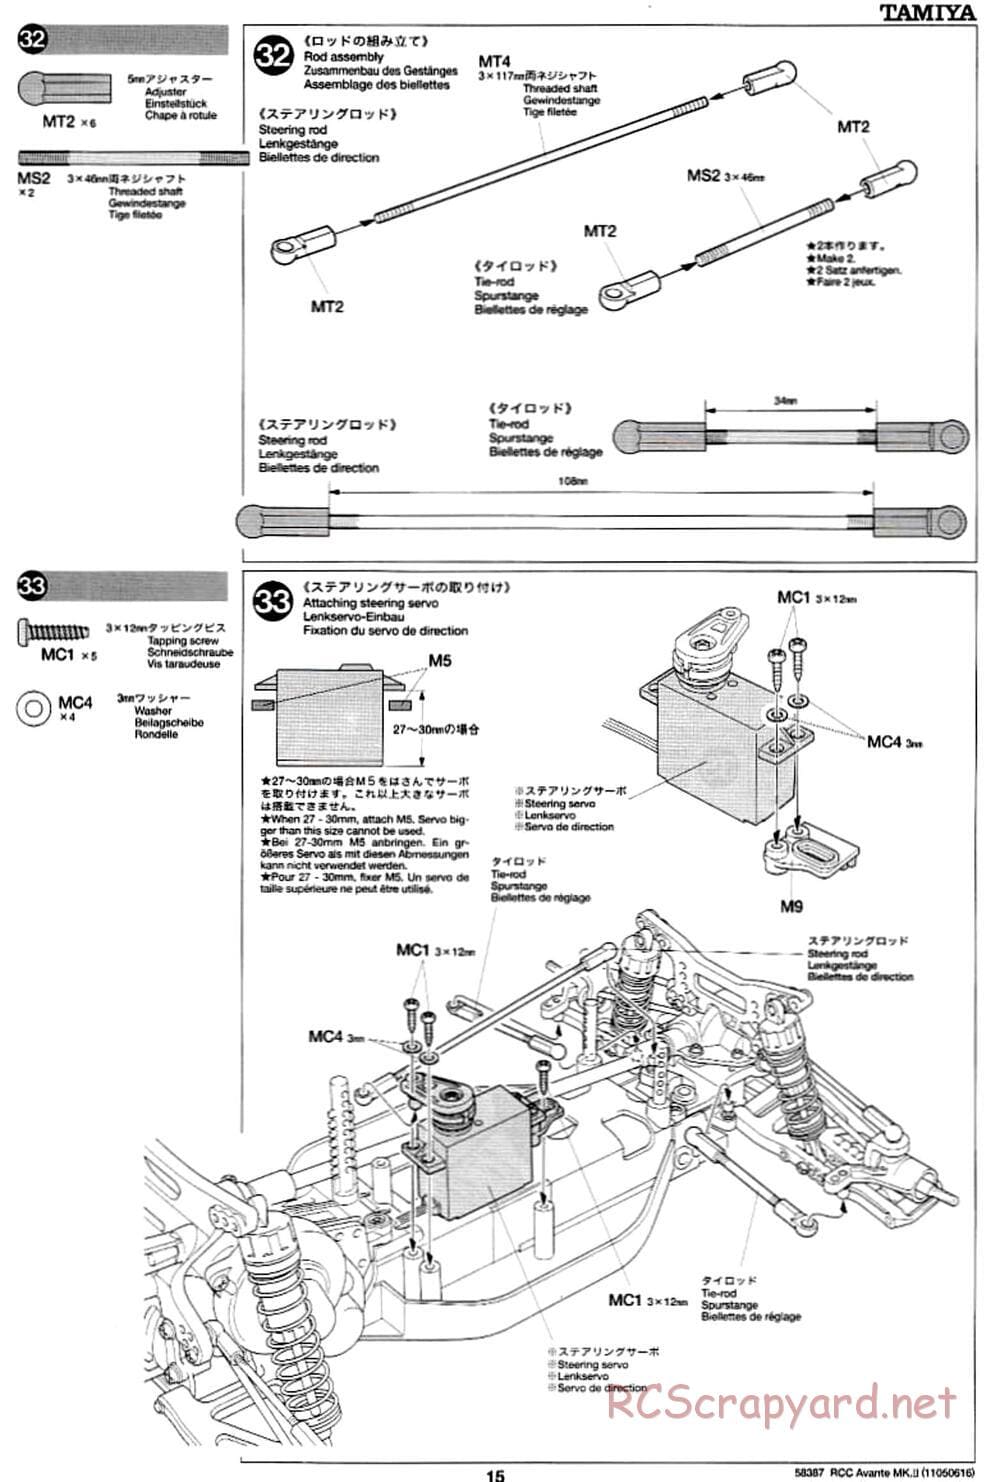 Tamiya - Avante Mk.II Chassis - Manual - Page 15